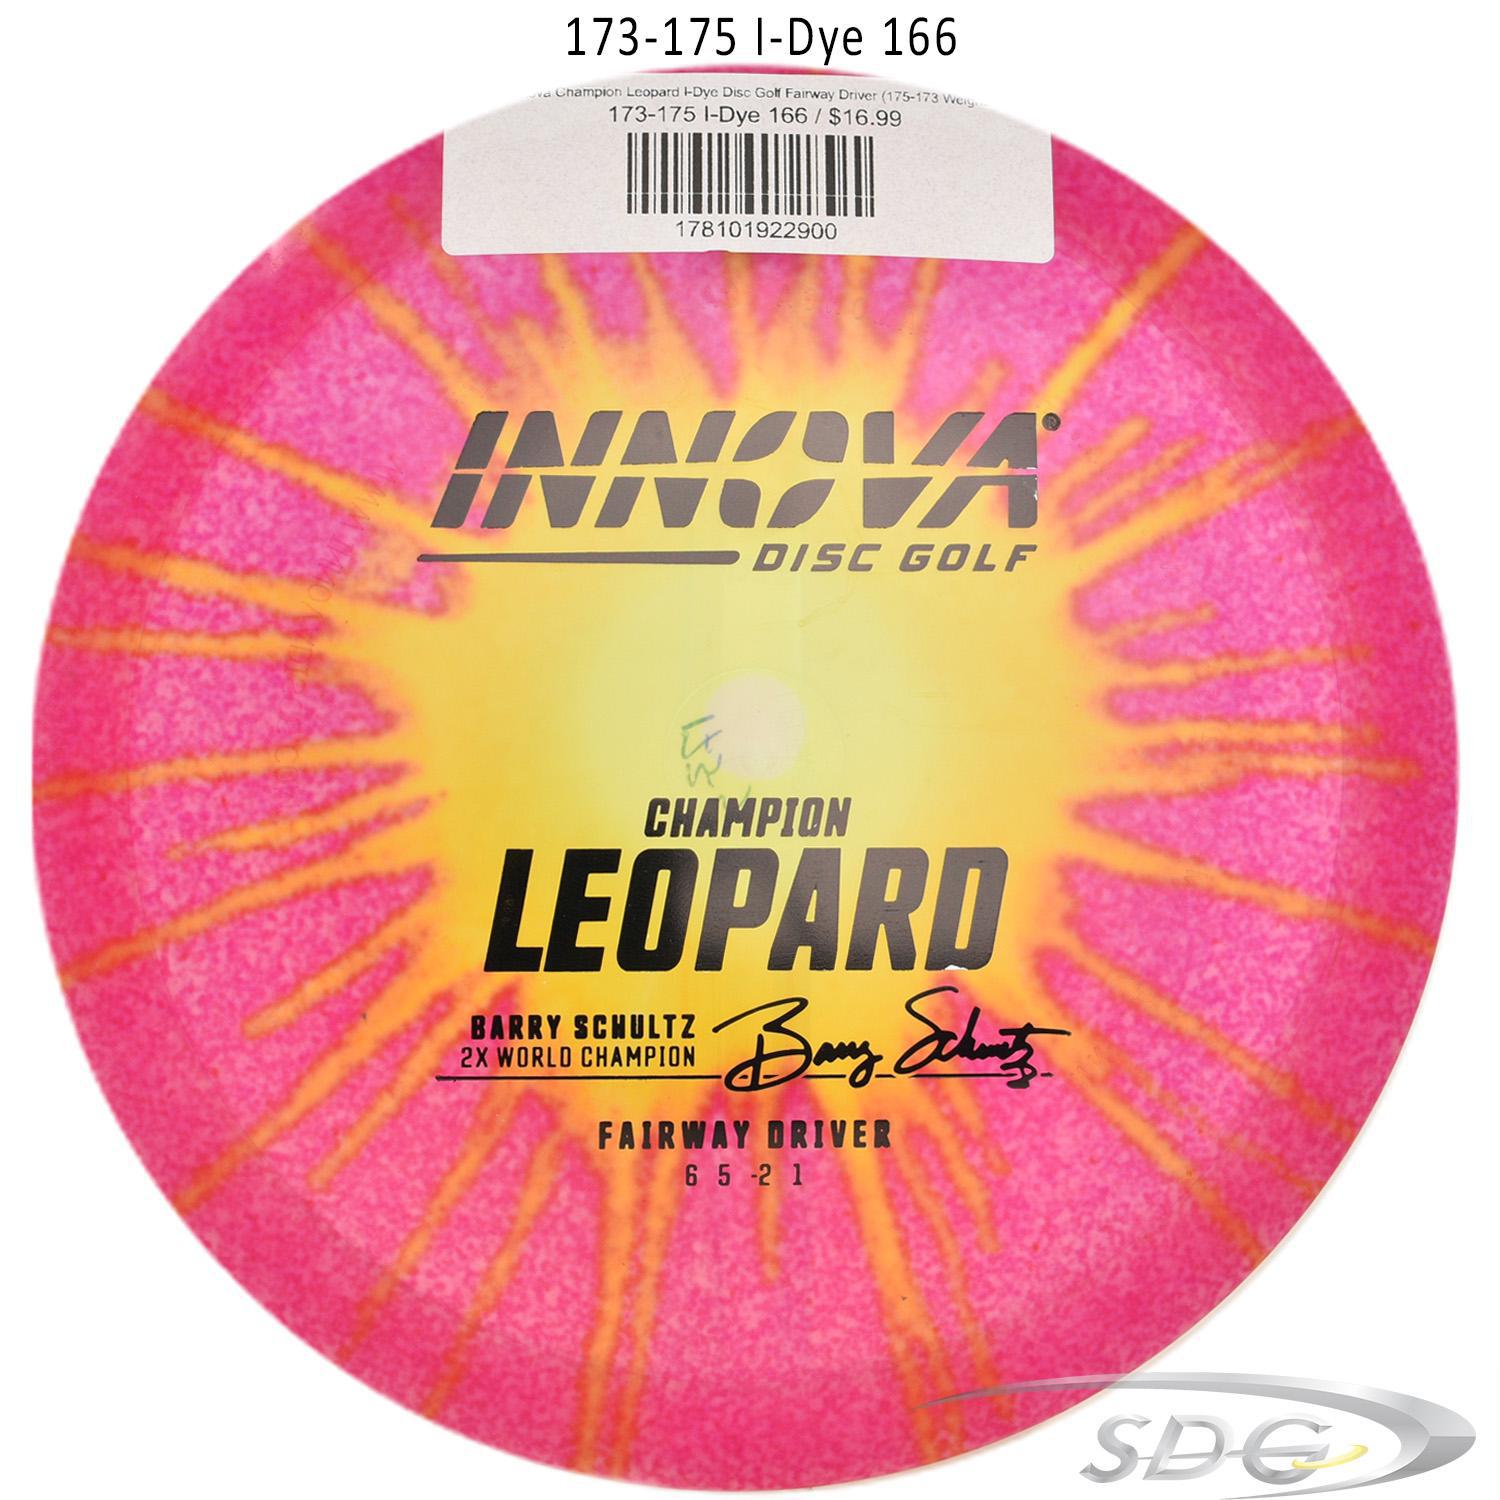 innova-champion-leopard-i-dye-disc-golf-fairway-driver 173-175 I-Dye 166 